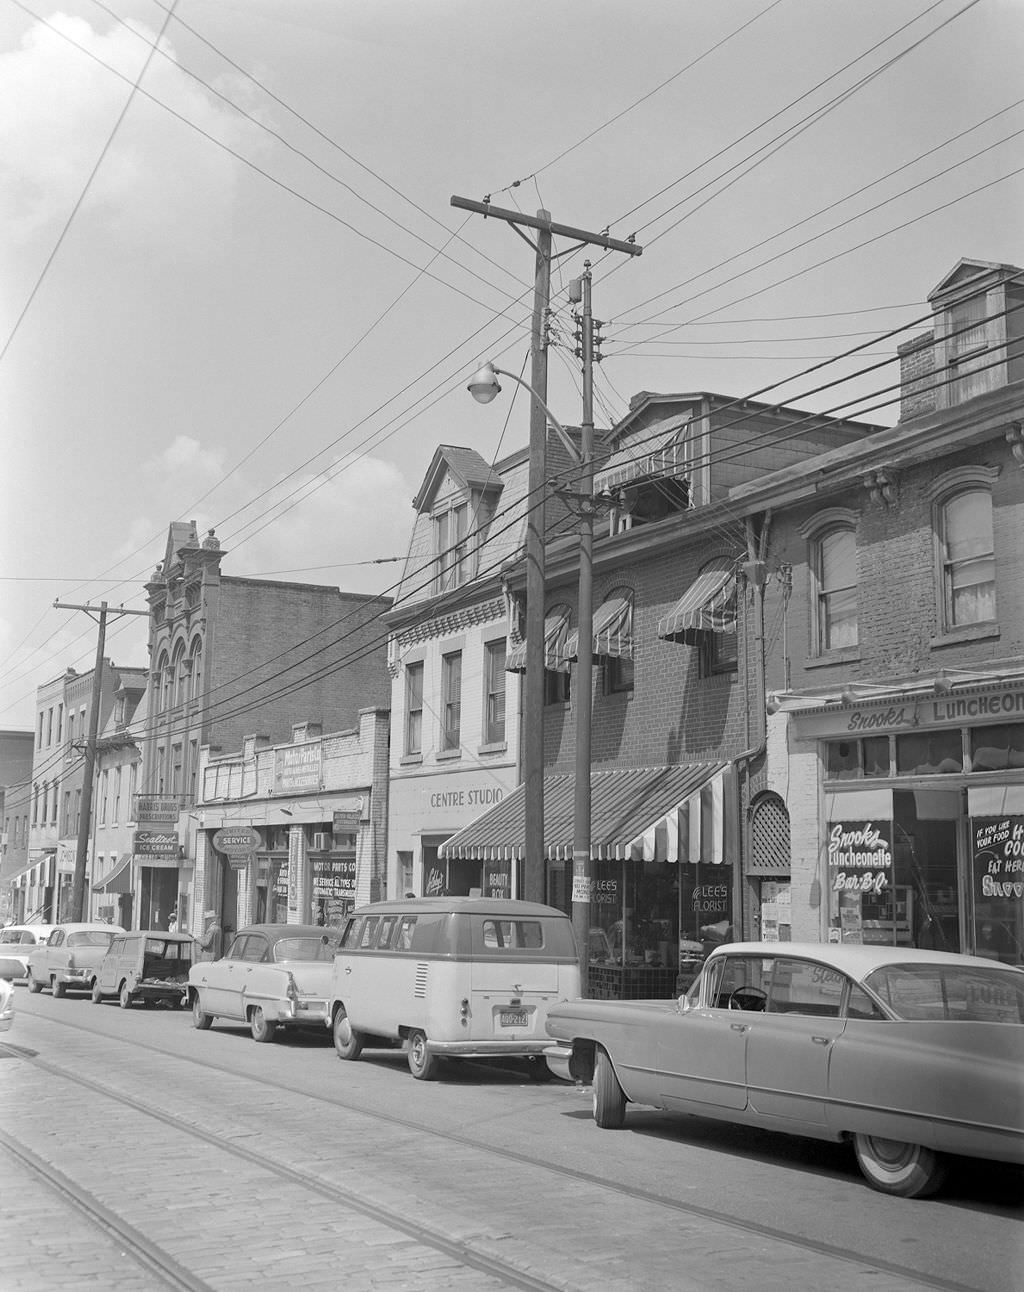 Centre Avenue, features Snooks Luncheonette and Lee's Florist, 1960.